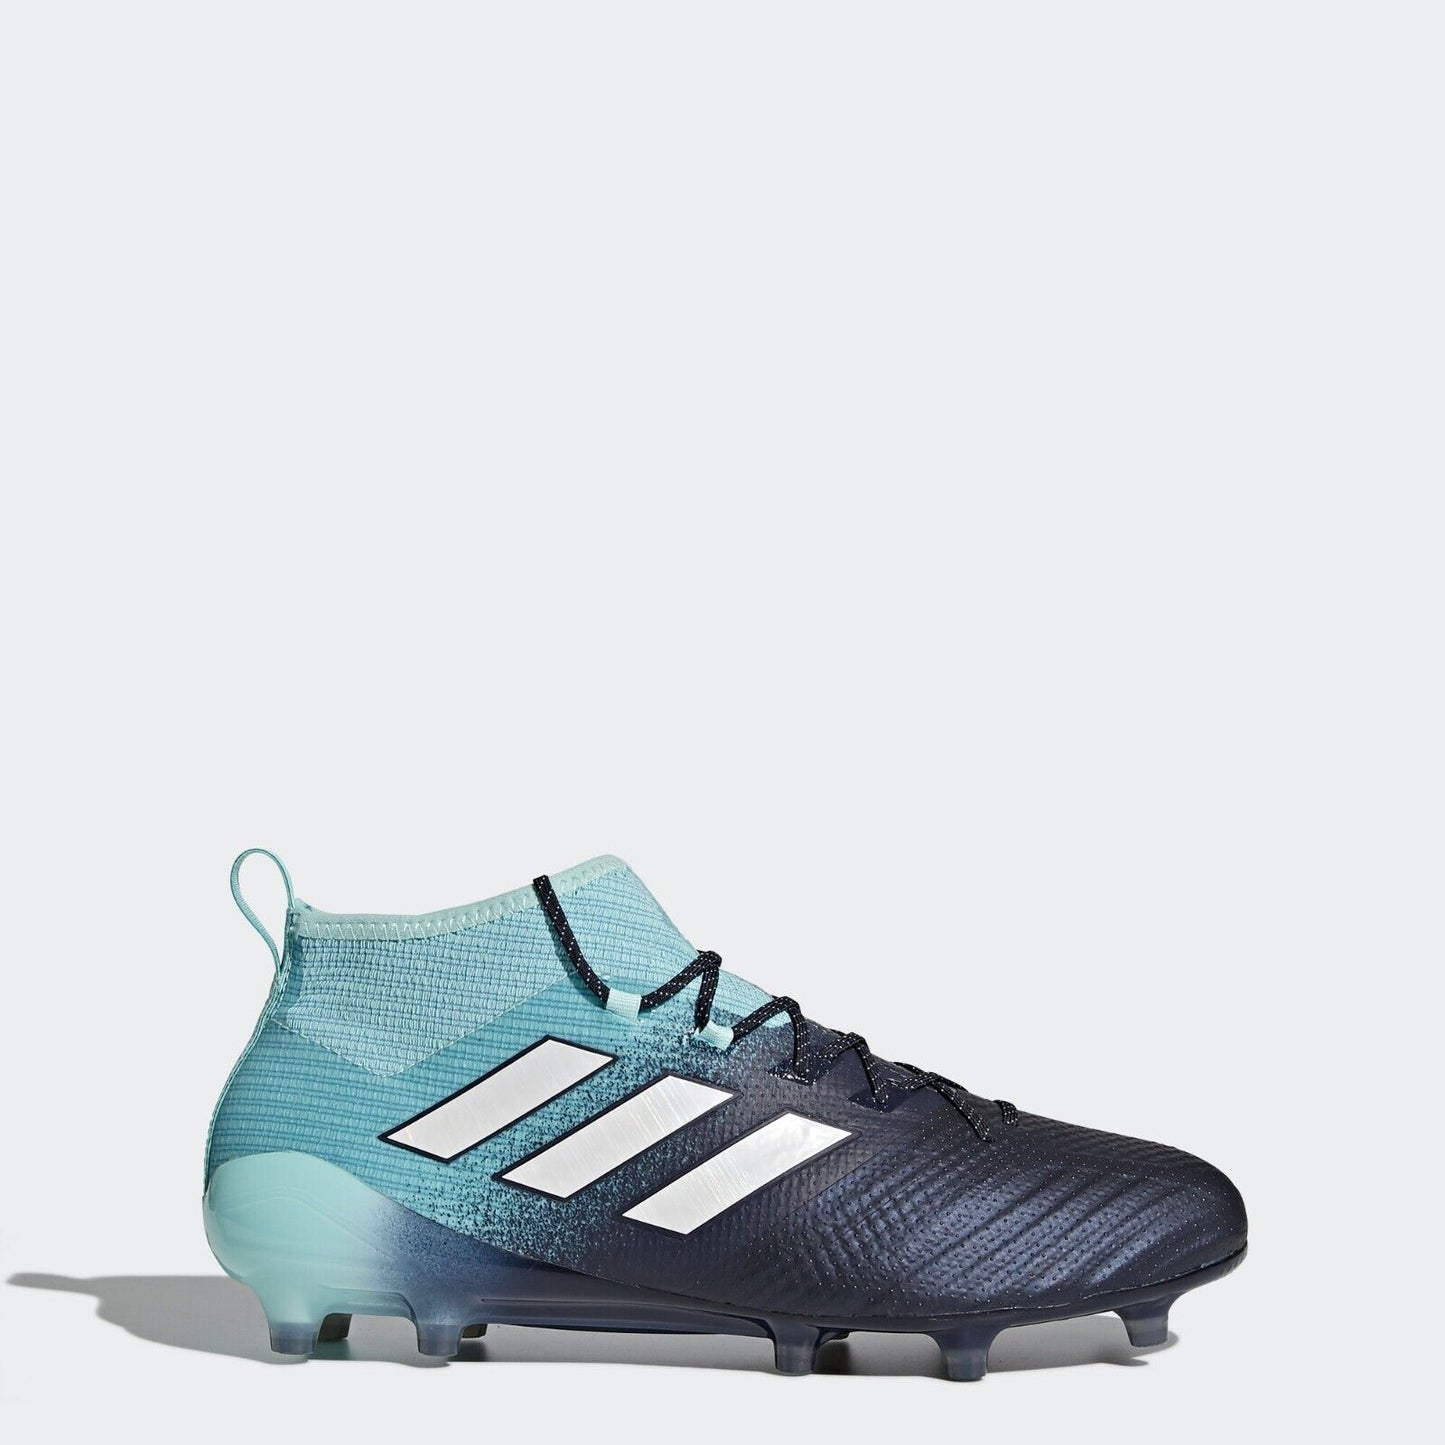 adidas Ace 17.1 FG Mens Football Boots - Energy Aqua